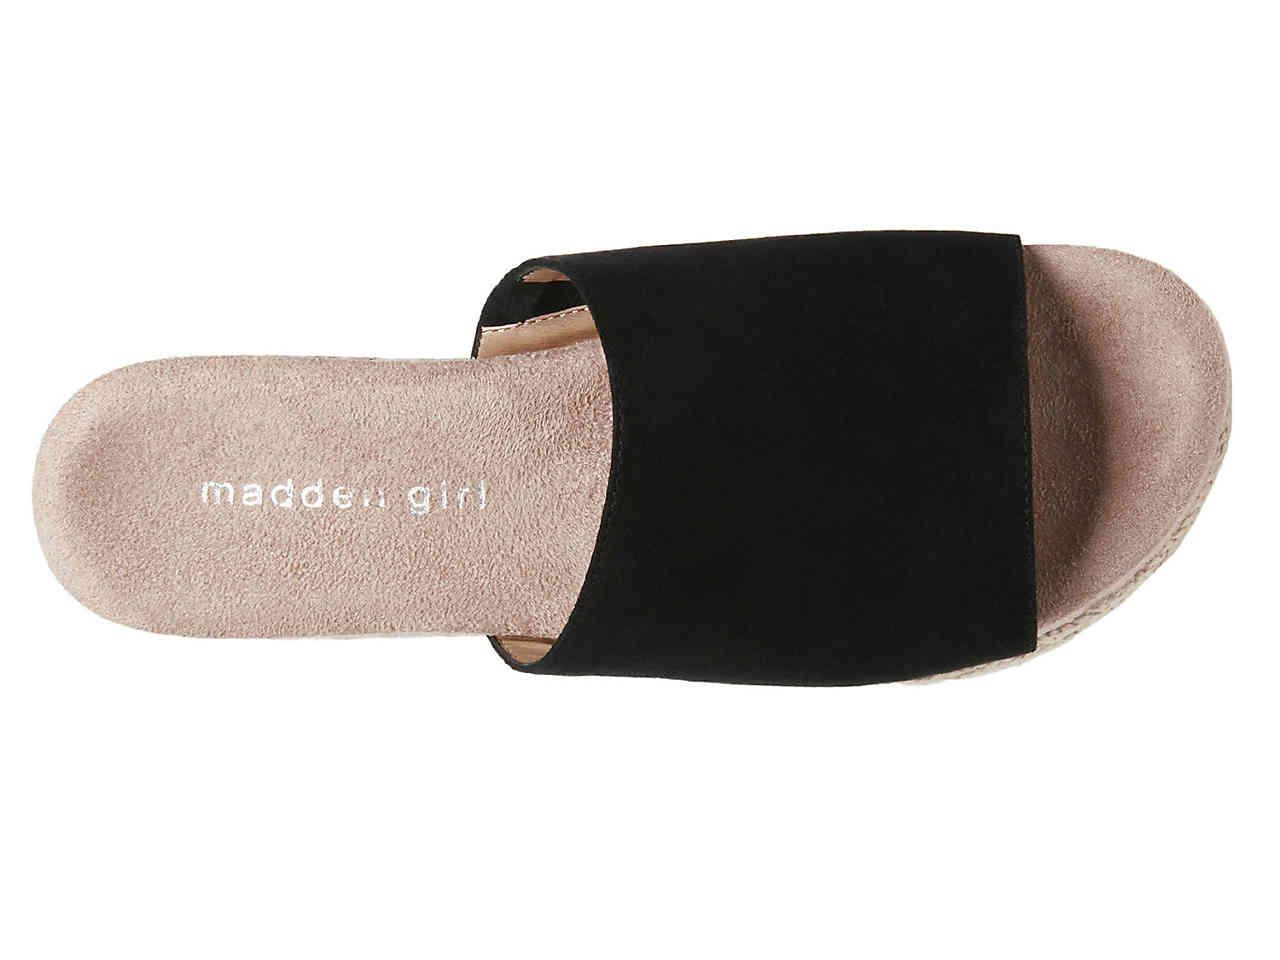 madden girl elite espadrille platform sandal